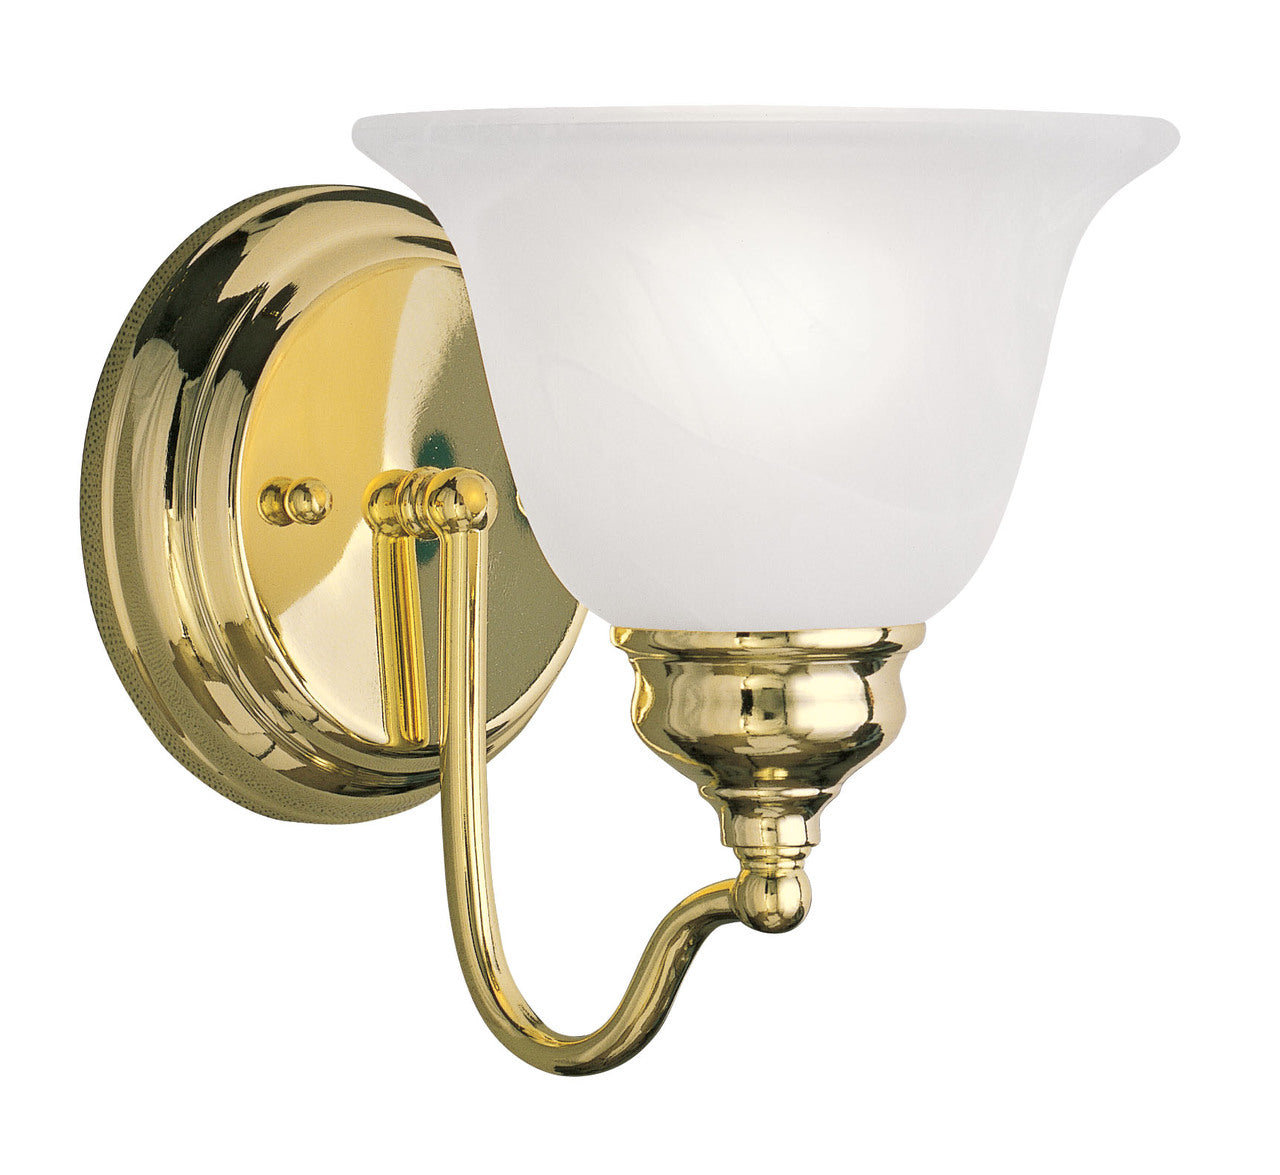 LIVEX Lighting 1351-02 Essex Bath Light in Polished Brass (1 Light)